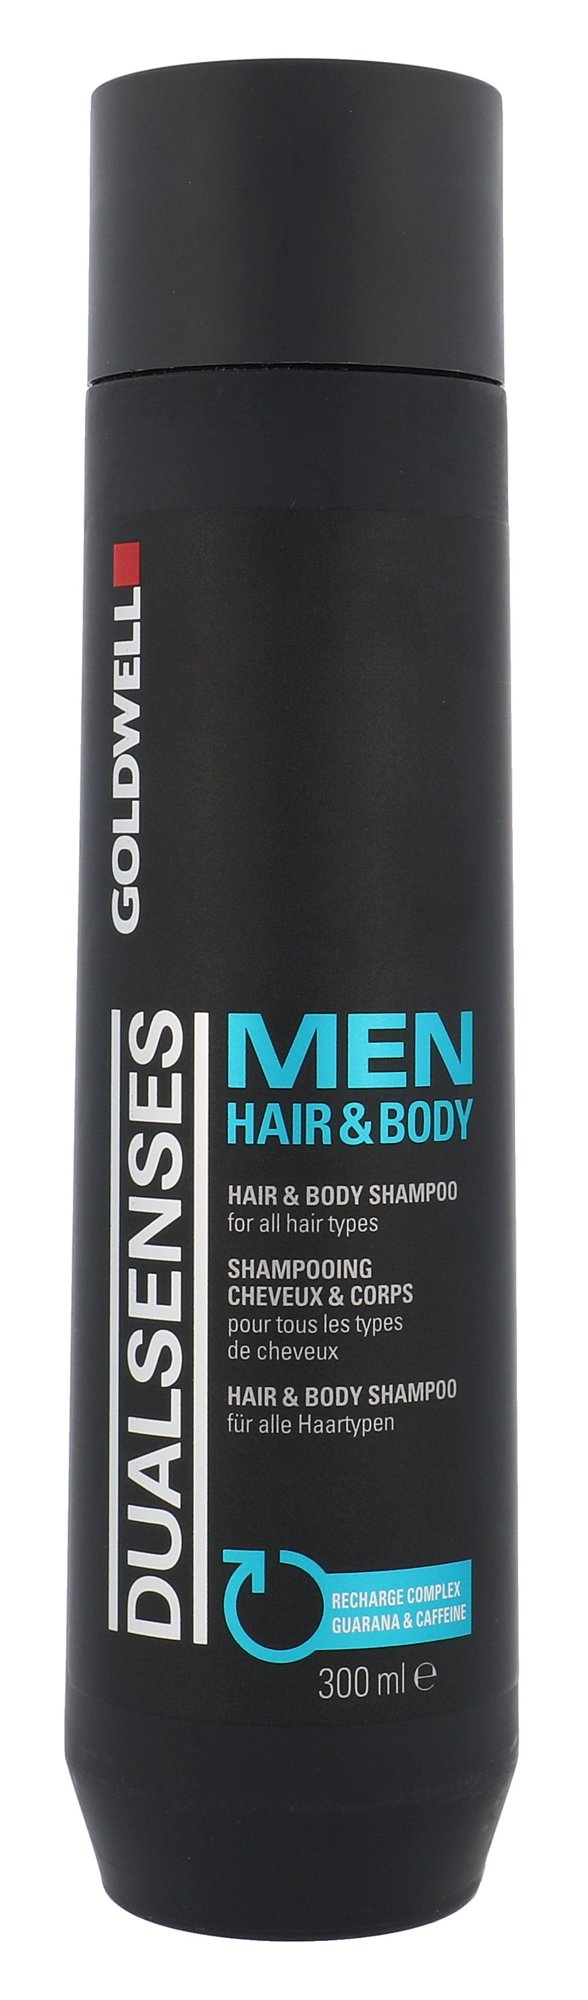 Goldwell Dualsenses For Men Hair & Body šampūnas